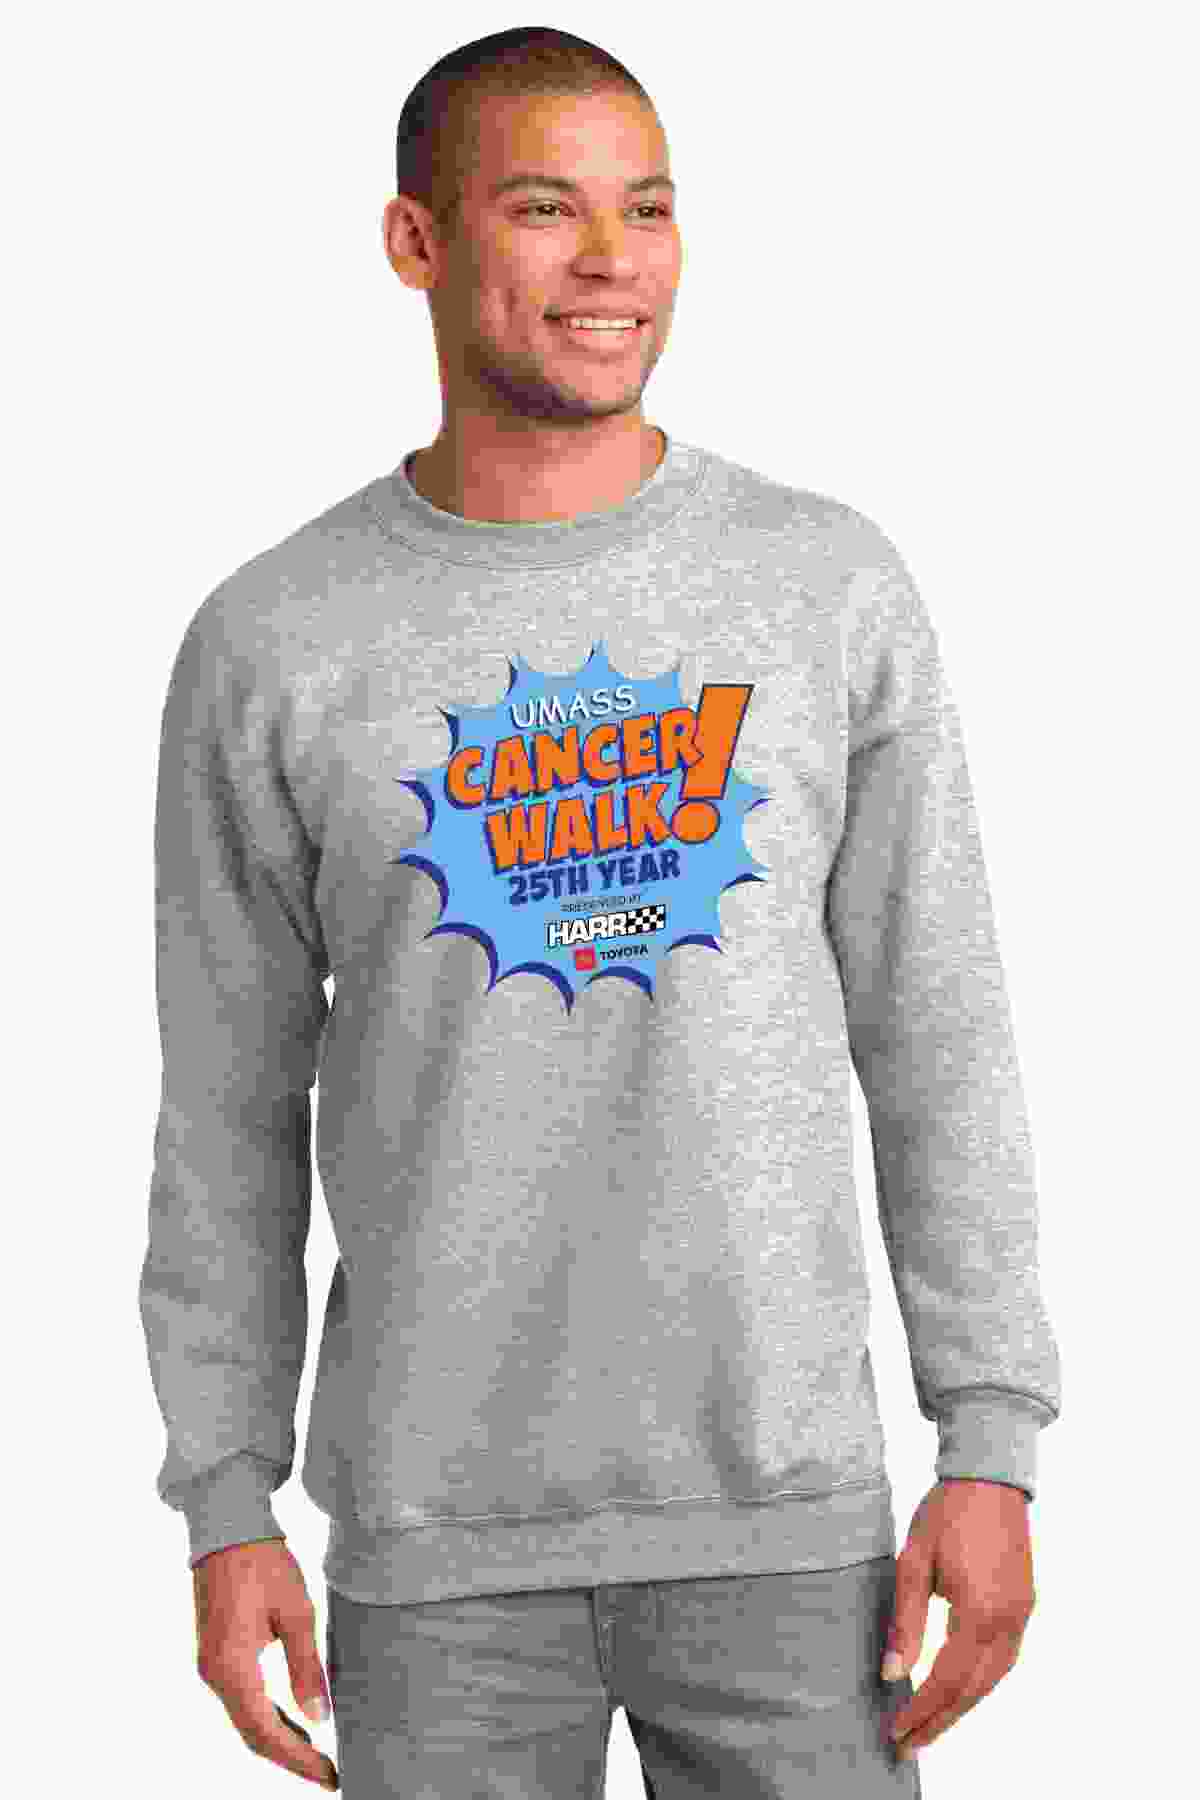 Sweatshirt with UMass Cancer Walk logo